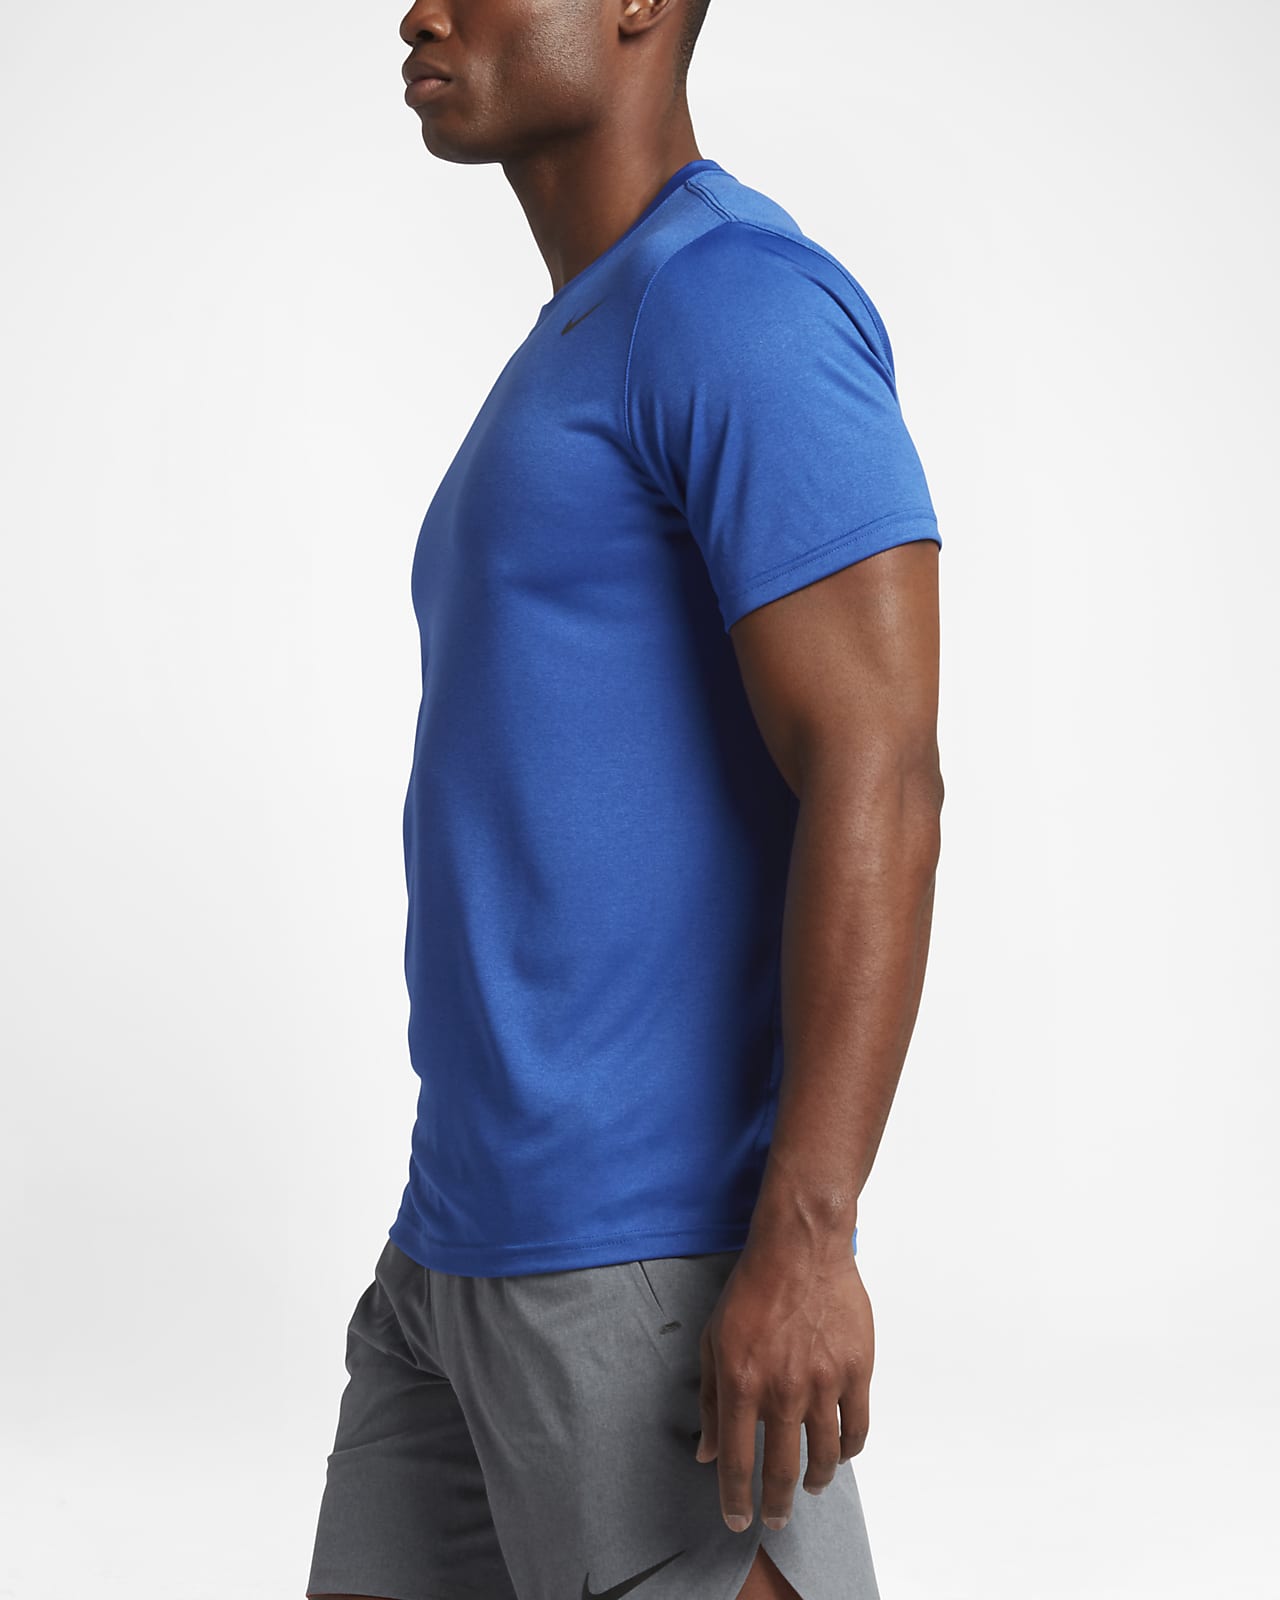 Preek bekennen Booth Nike Dri-FIT Legend Men's Training T-Shirt. Nike.com